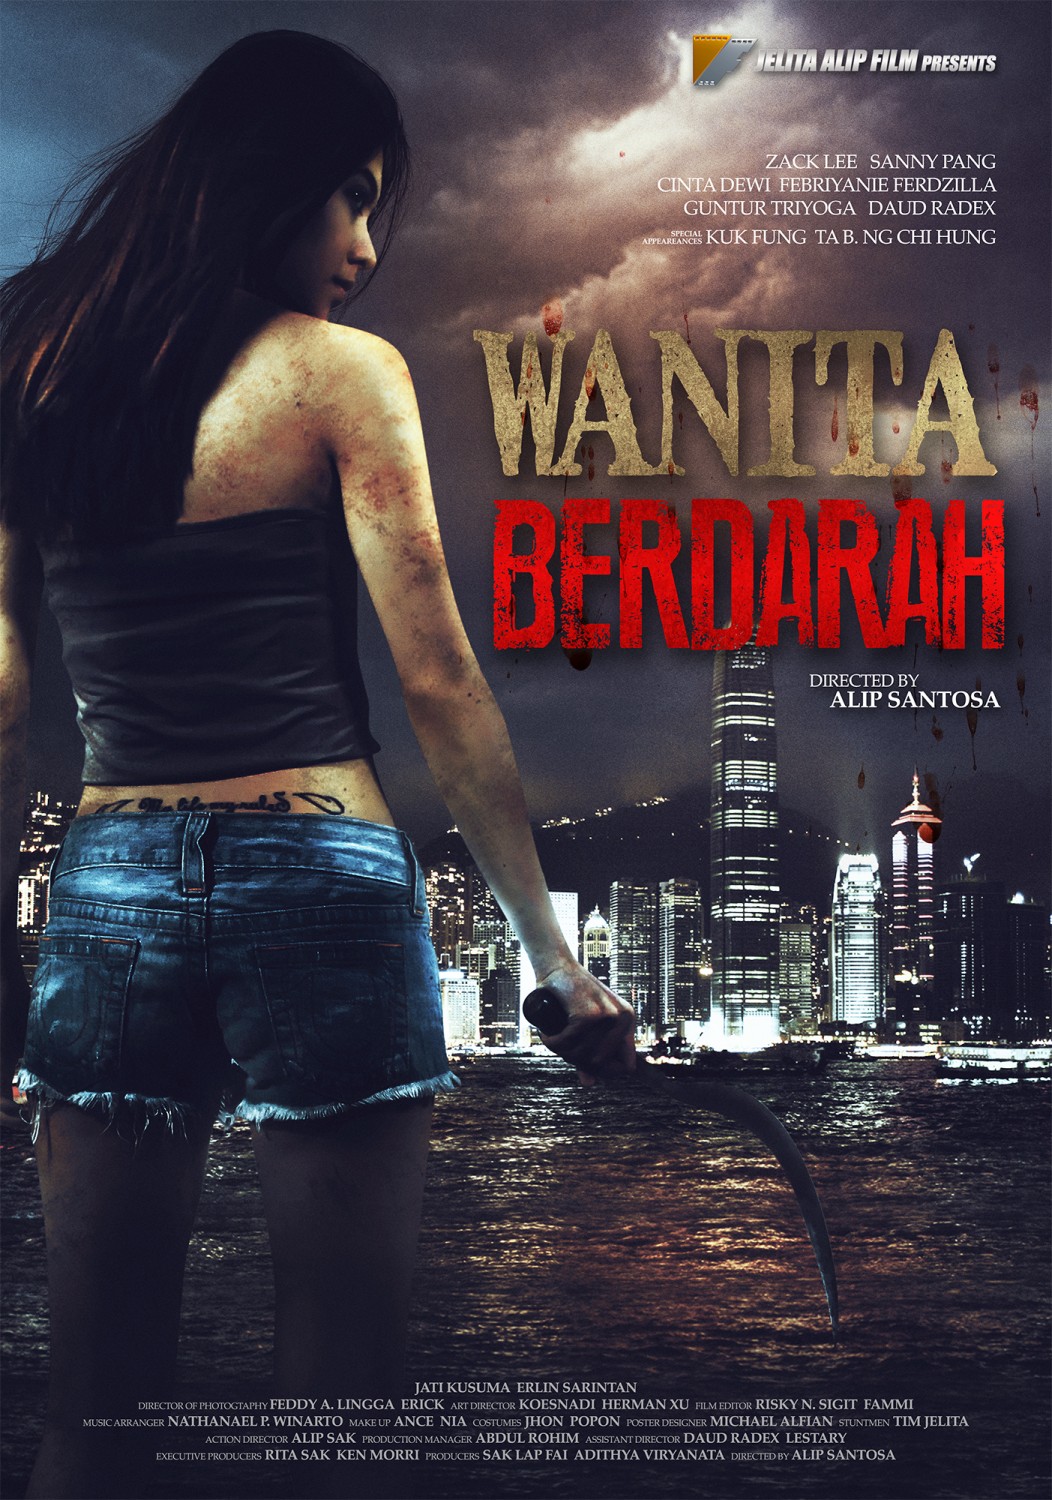 Extra Large Movie Poster Image for Wanita Berdarah 